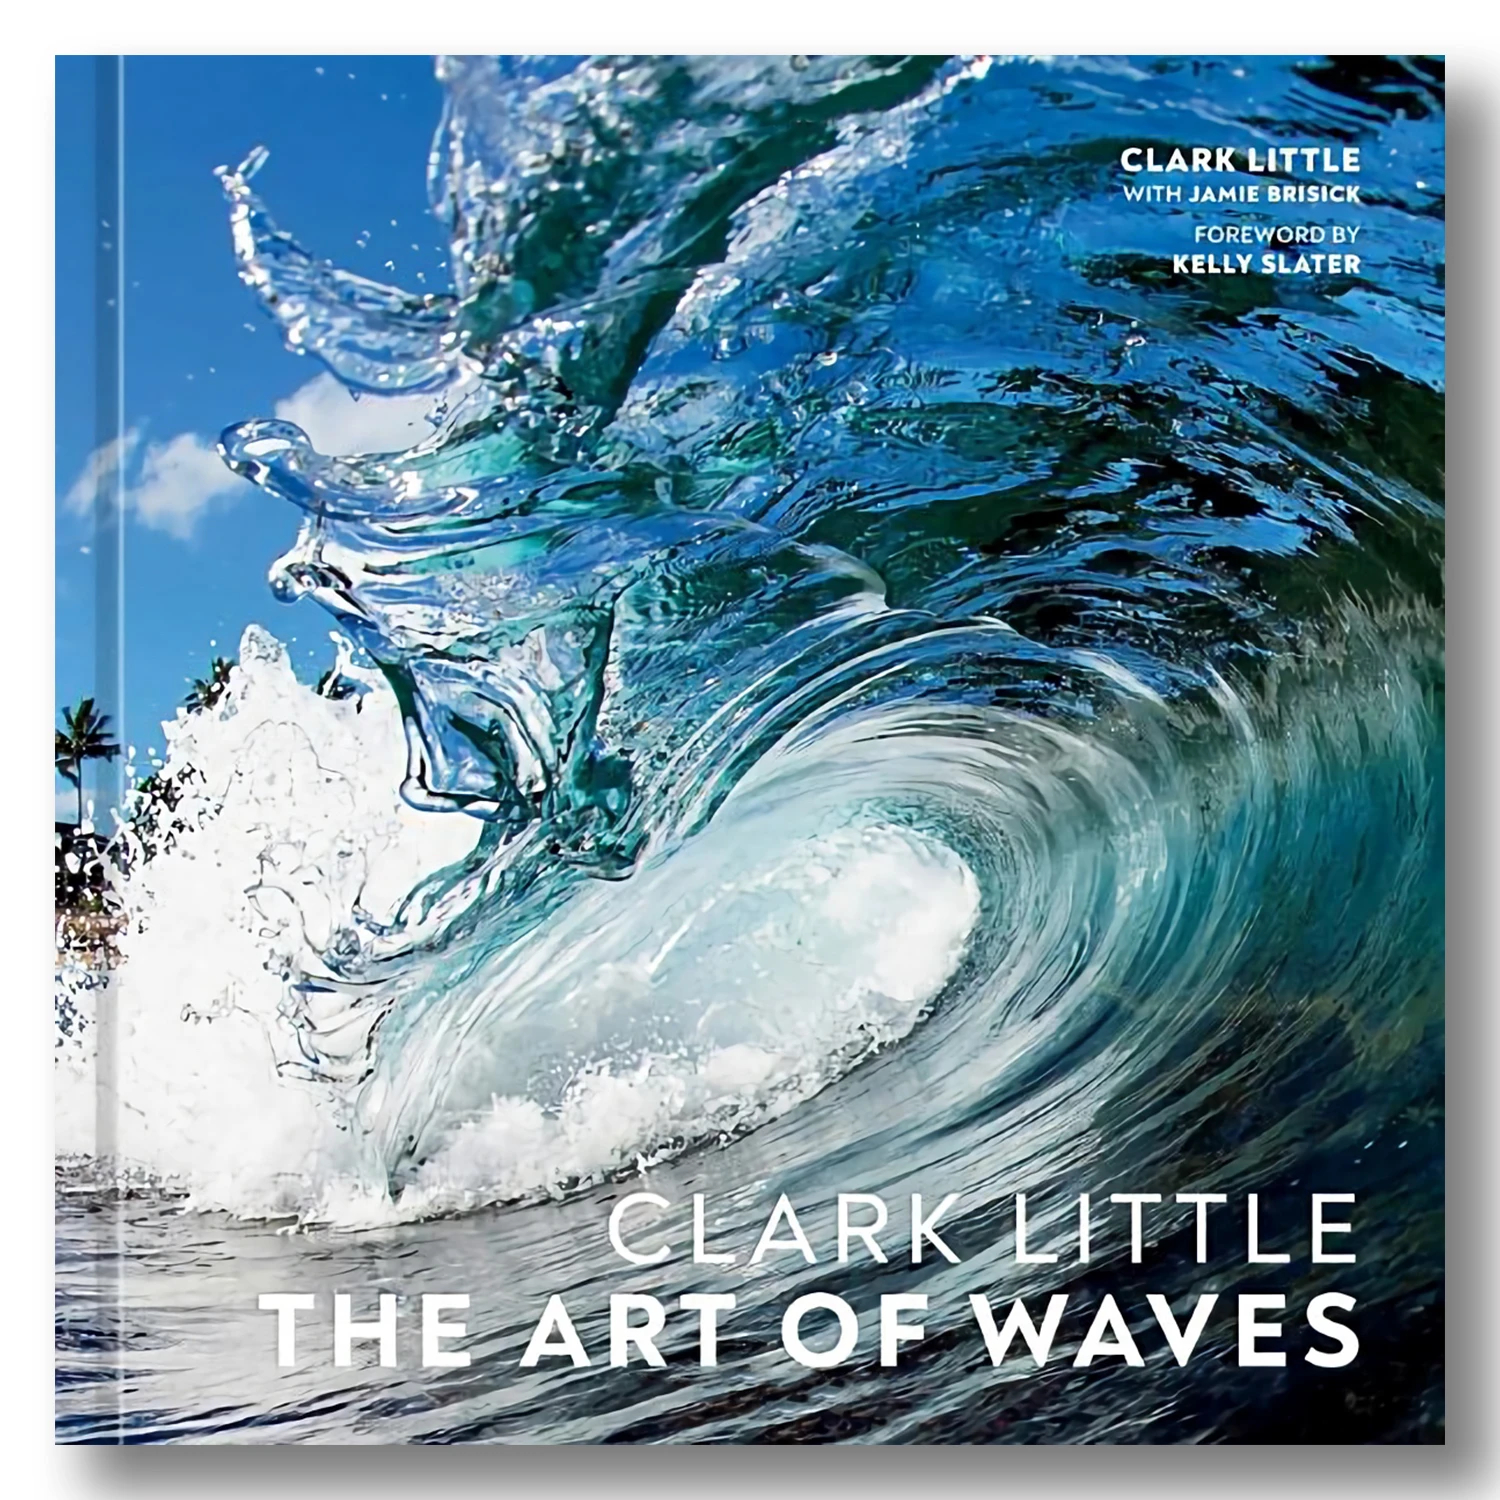 CLARK LITTLE THE ART OF WAVES